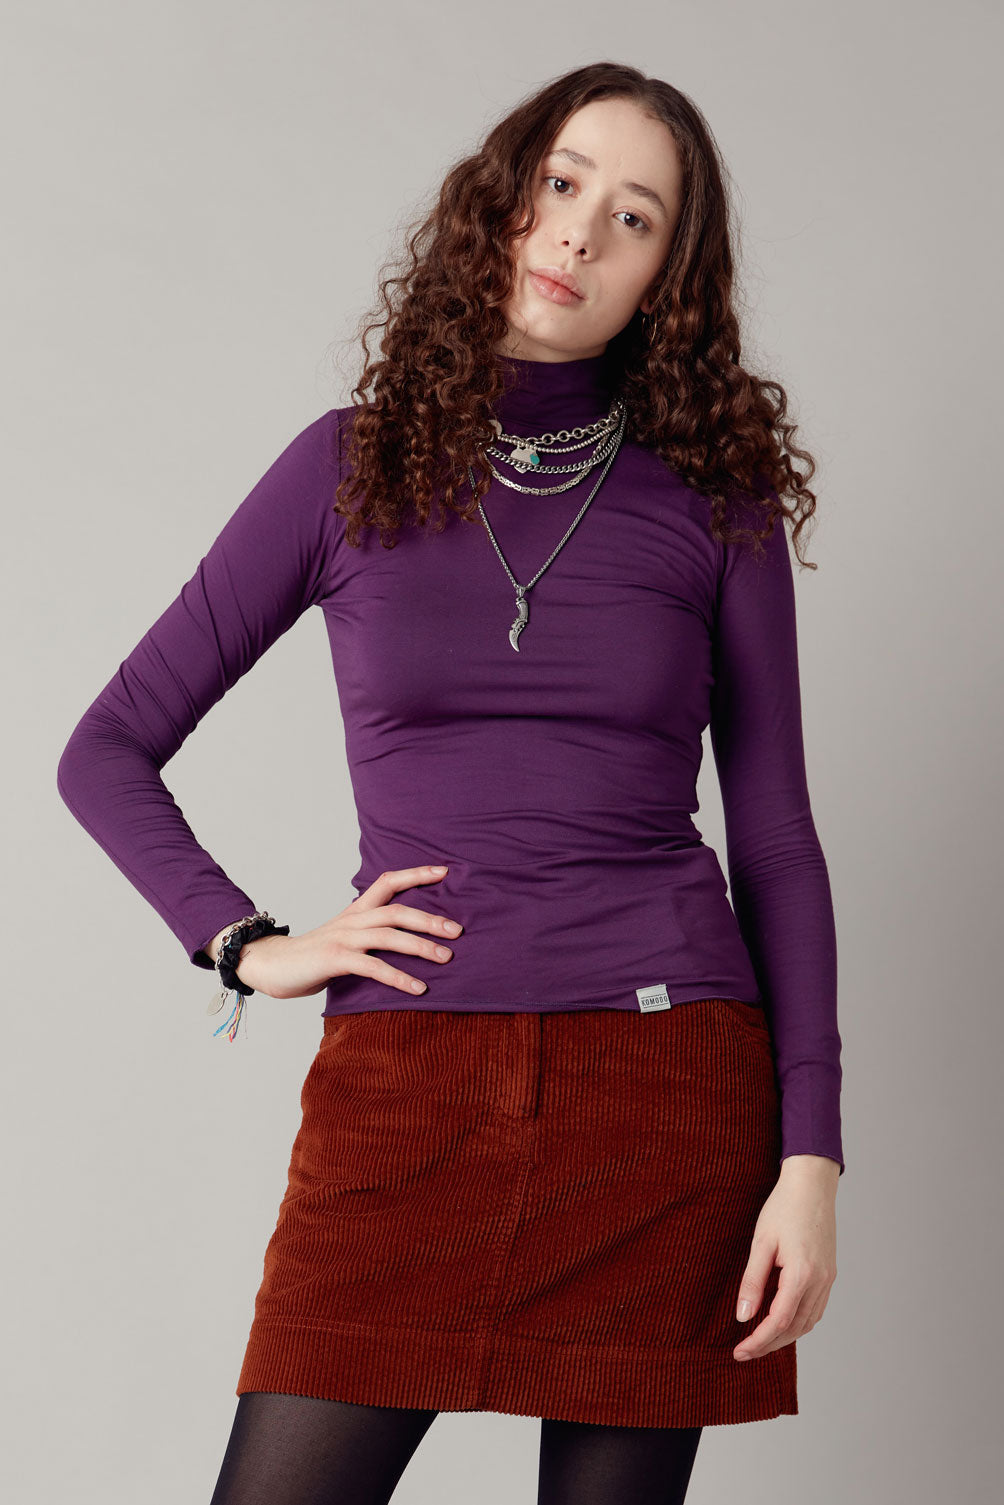 Violet, long-sleeved top SKINILLA made of modal by Komodo